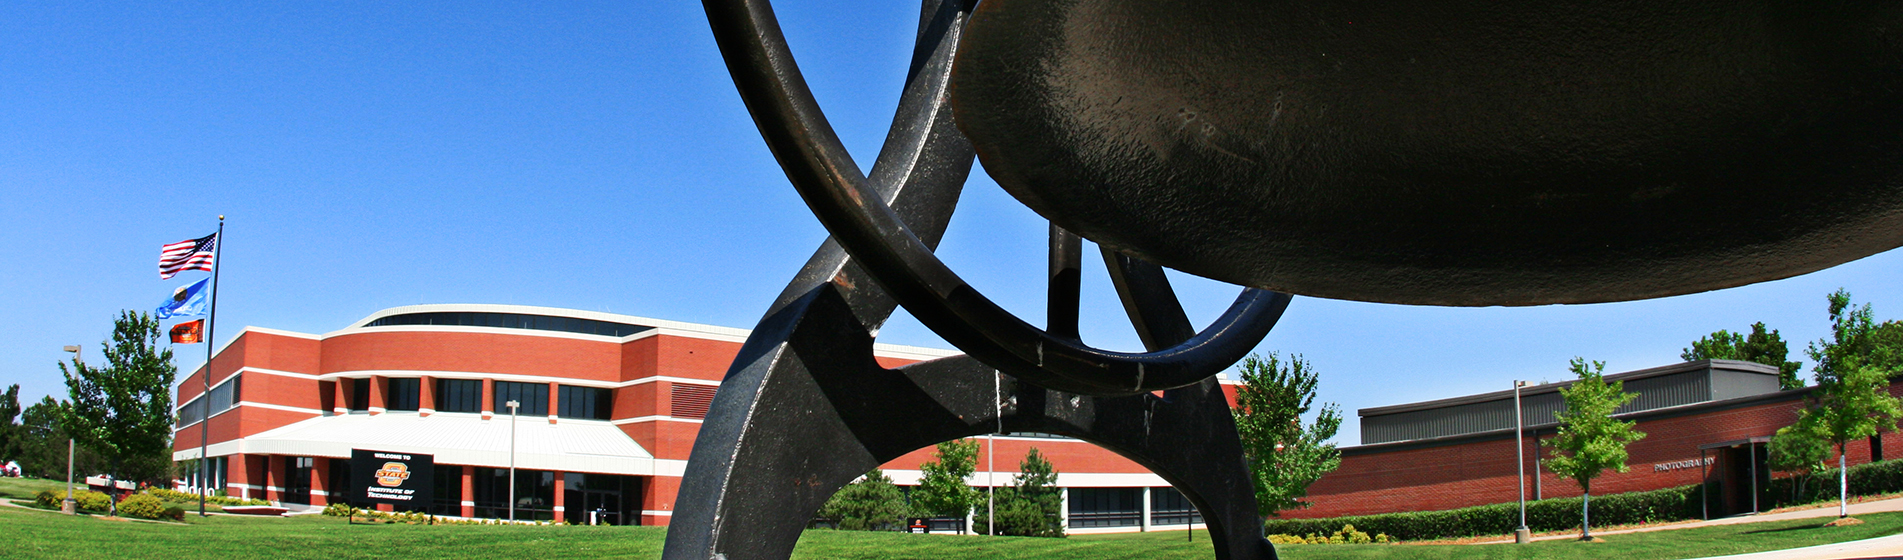 Bell outside of Donald W. Reynolds Technology Center